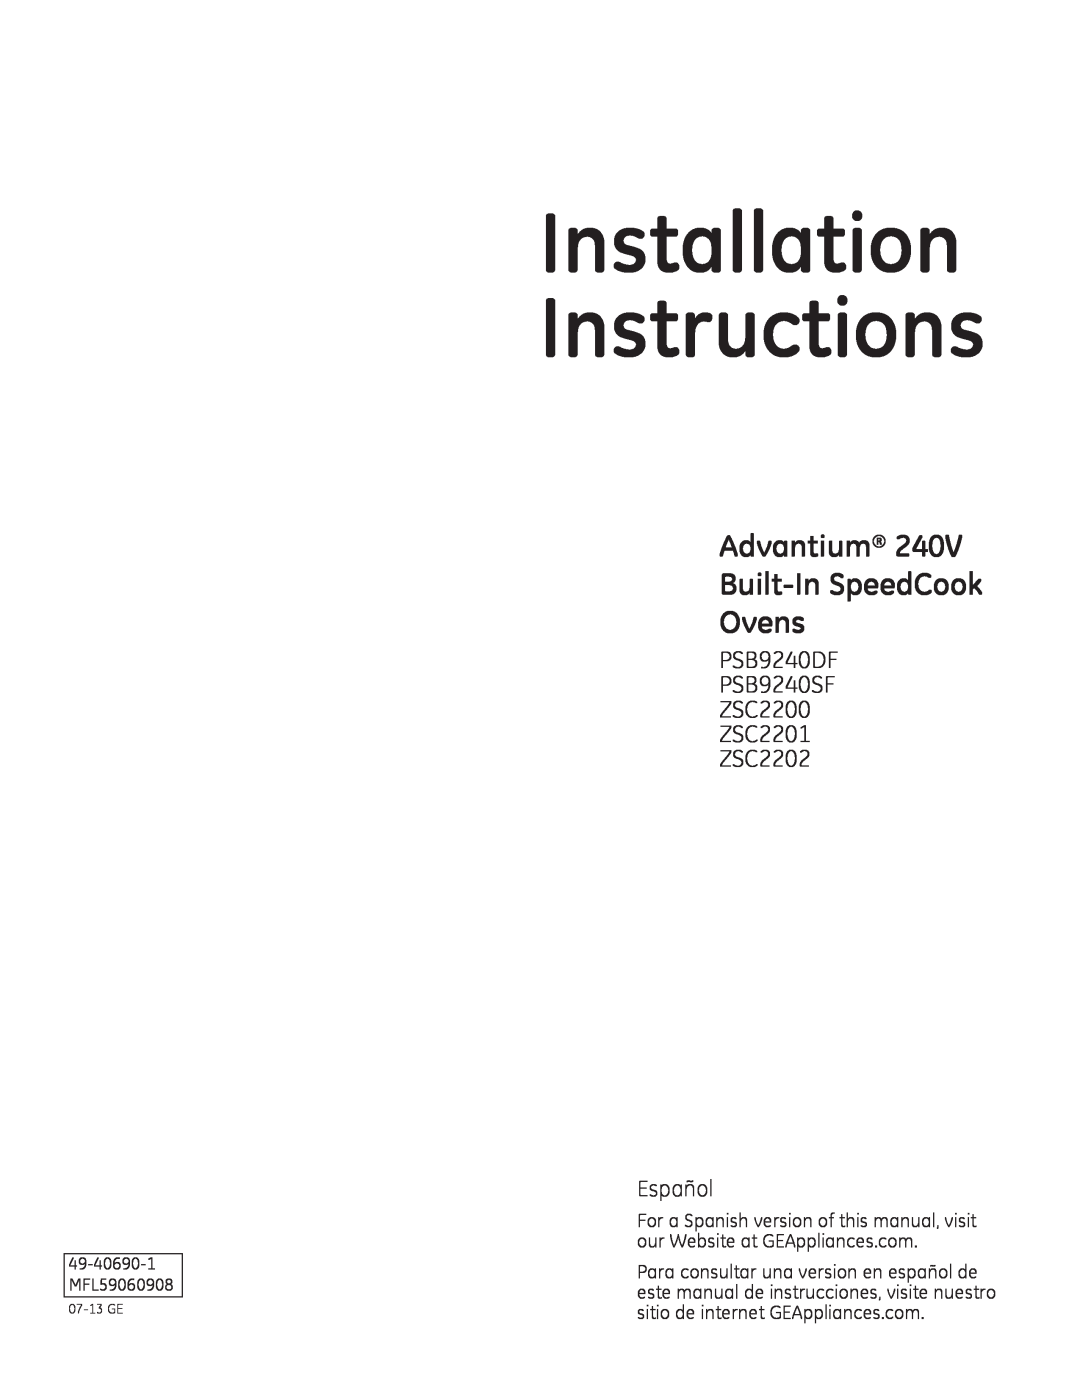 GE Monogram ZSC2200 installation instructions Installation Instructions, Advantium Built-In SpeedCook Ovens, Español 